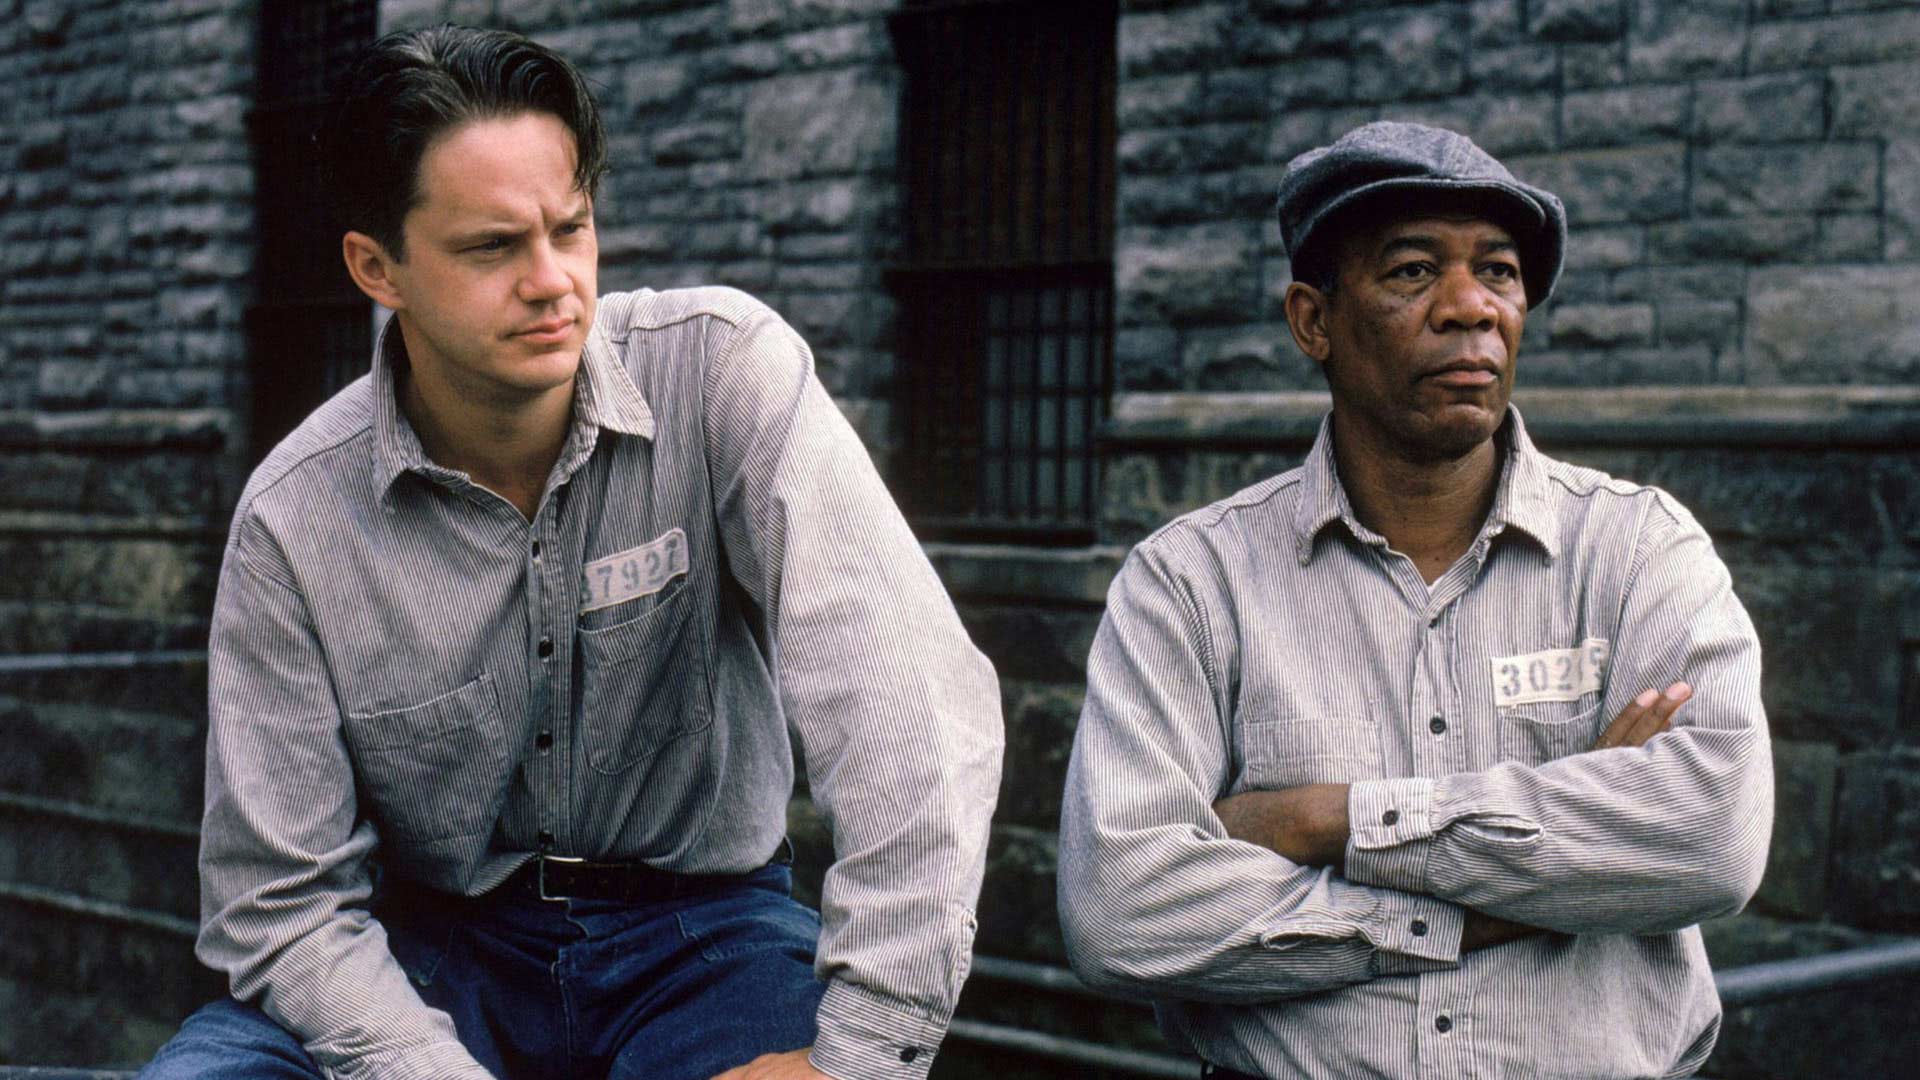 Nhà tù Shawshank - The Shawshank Redemption (1994)